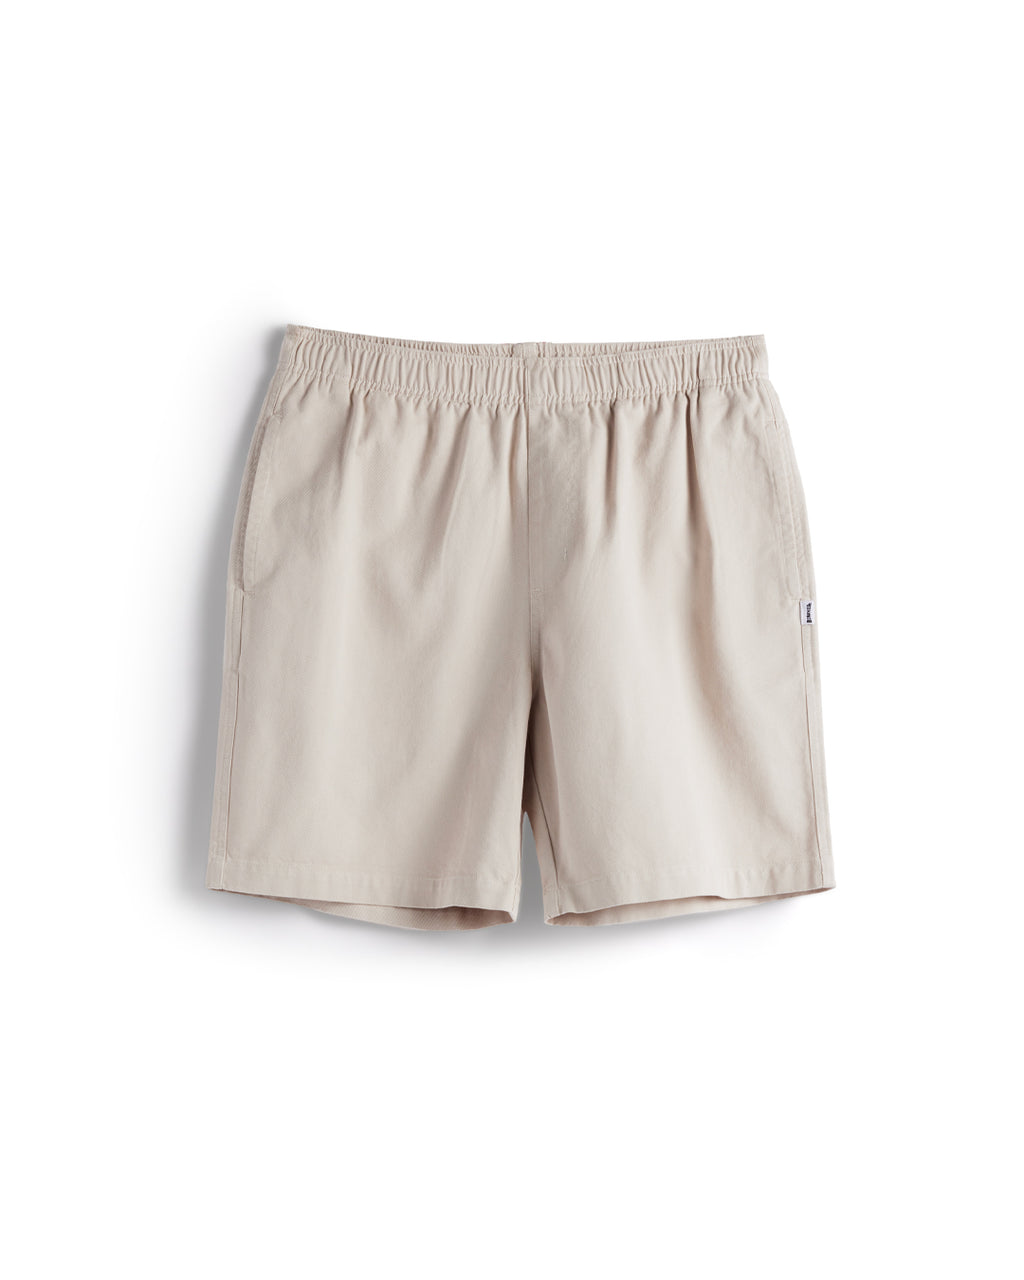 Men's Shorts – Corduroy & More – Birdwell